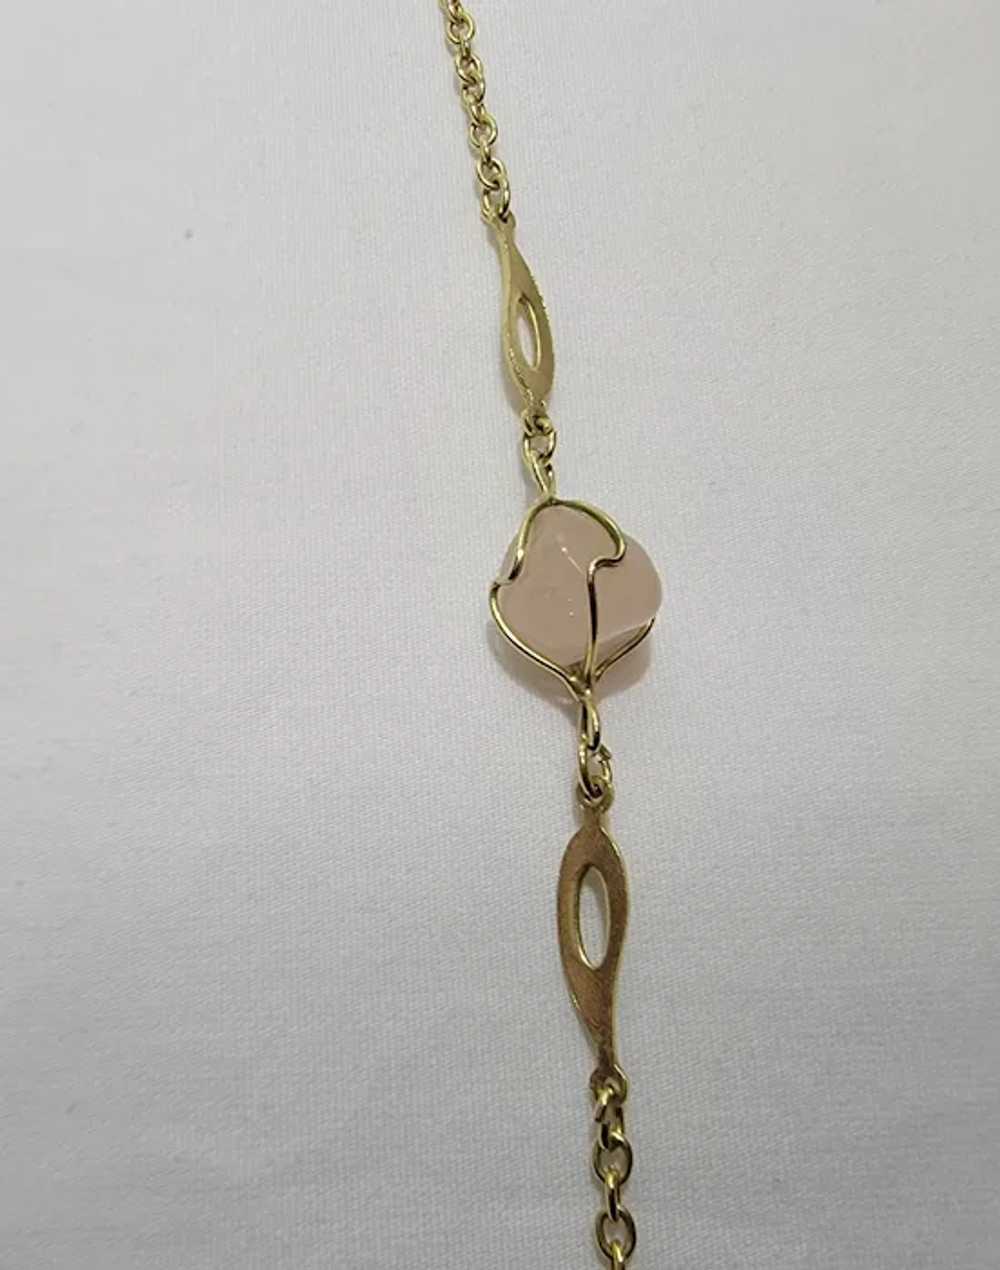 Goldtone chain eternity necklace with semipreciou… - image 12